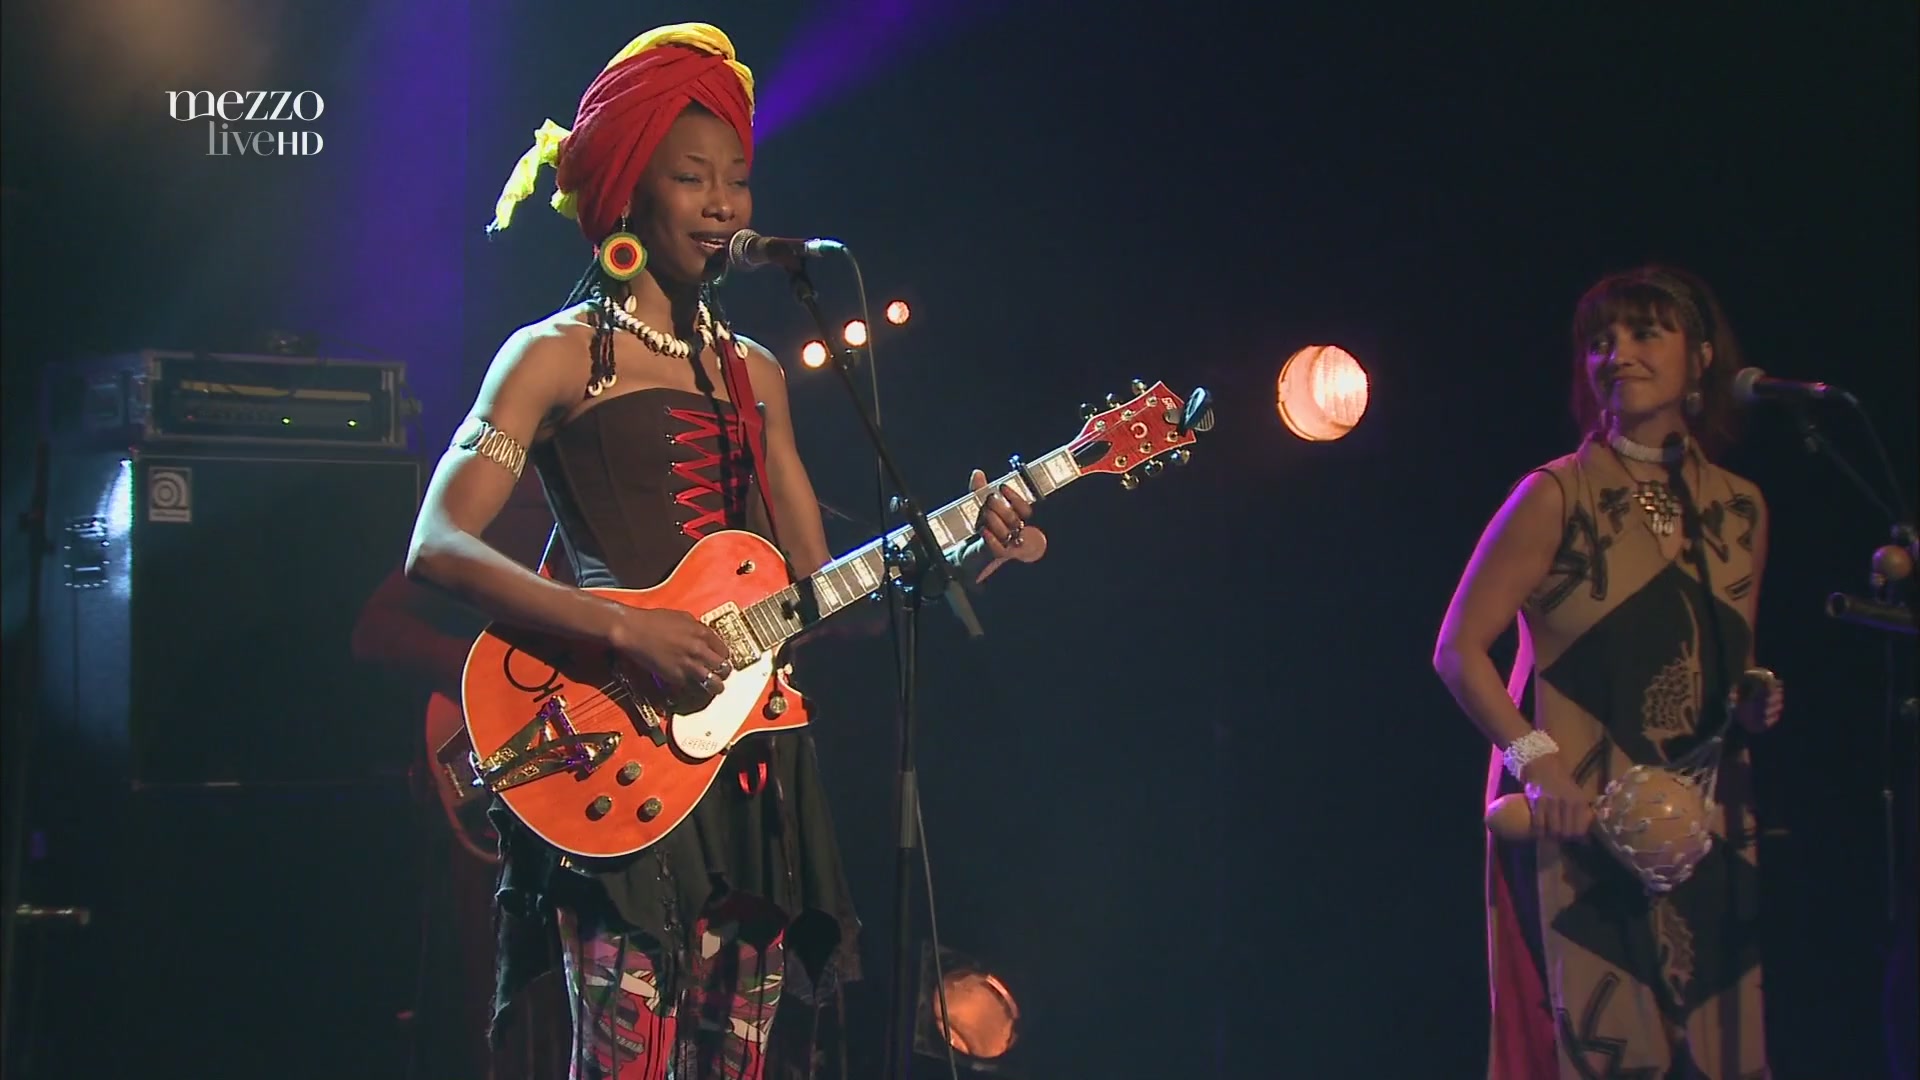 2012 Fatoumata Diawara - Live at Festival Au fil des Voix [HDTV 1080i] 0